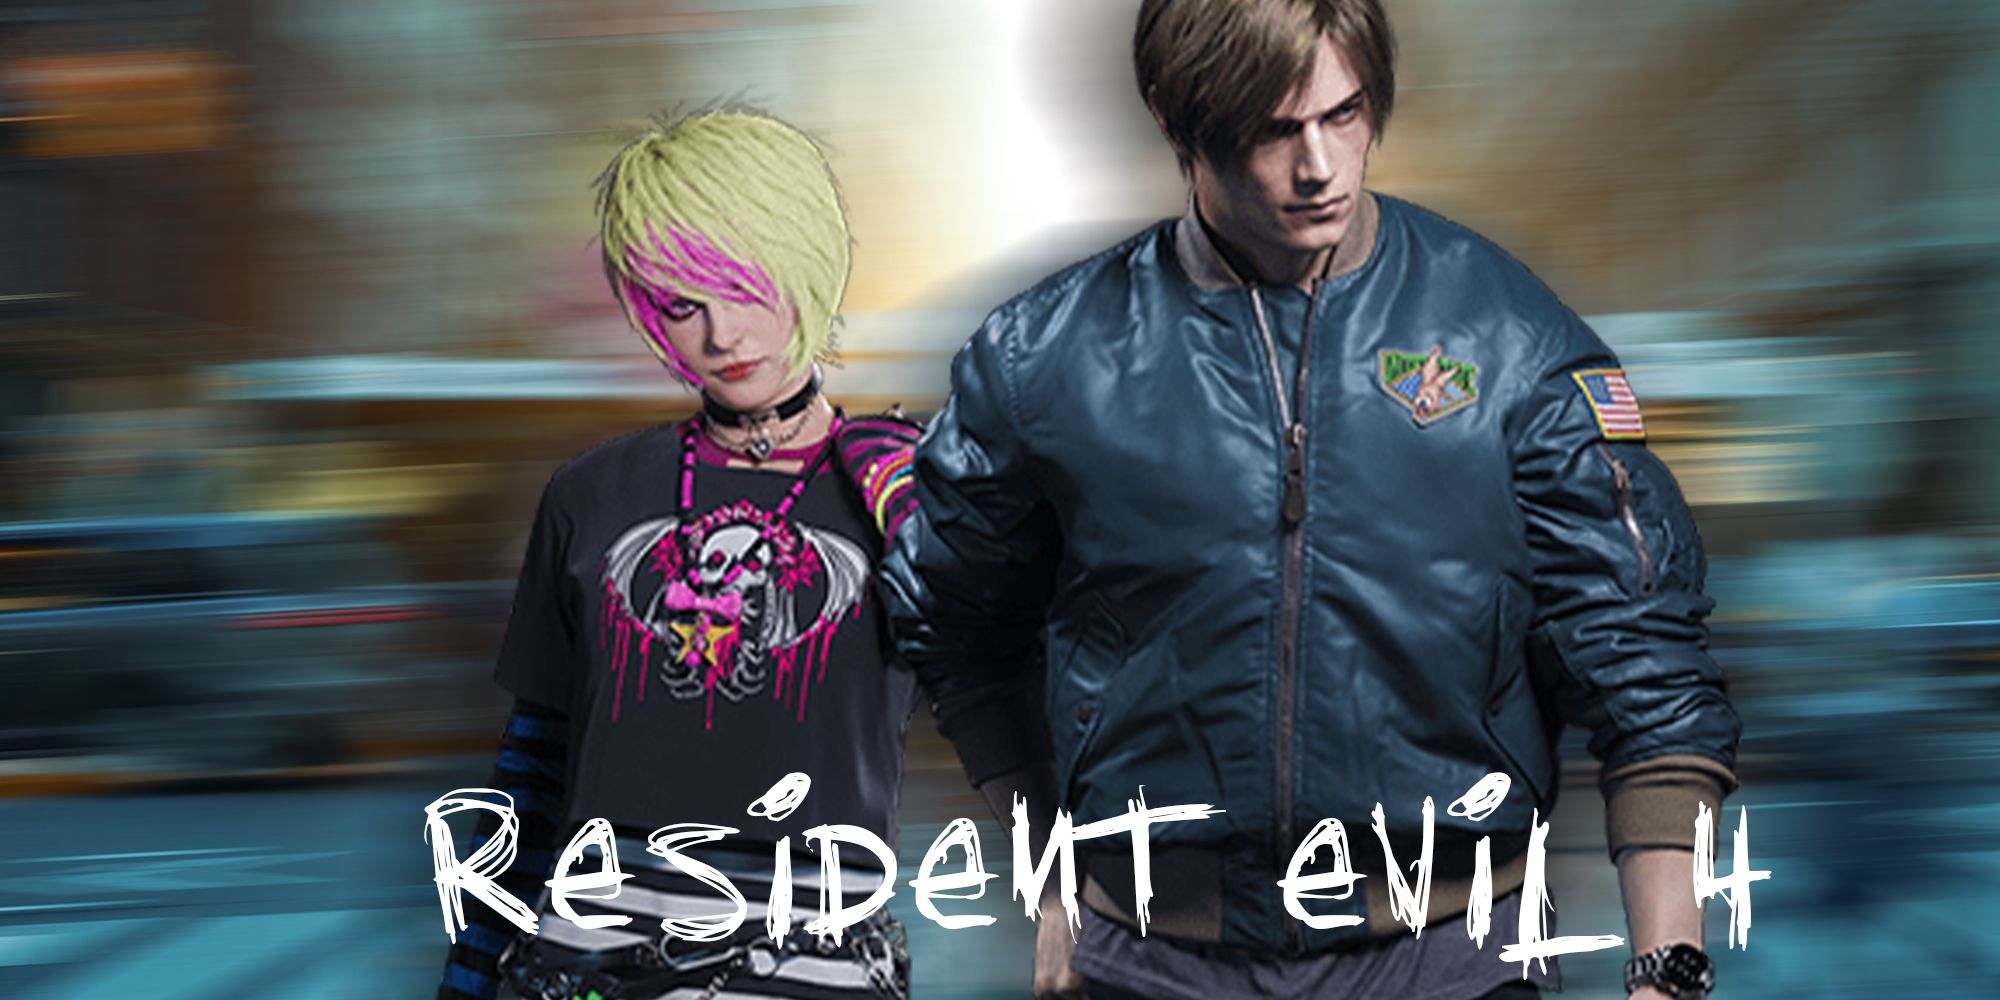 Ashley Graham's Scene Kid Outfit Is Resident Evil 4's Greatest